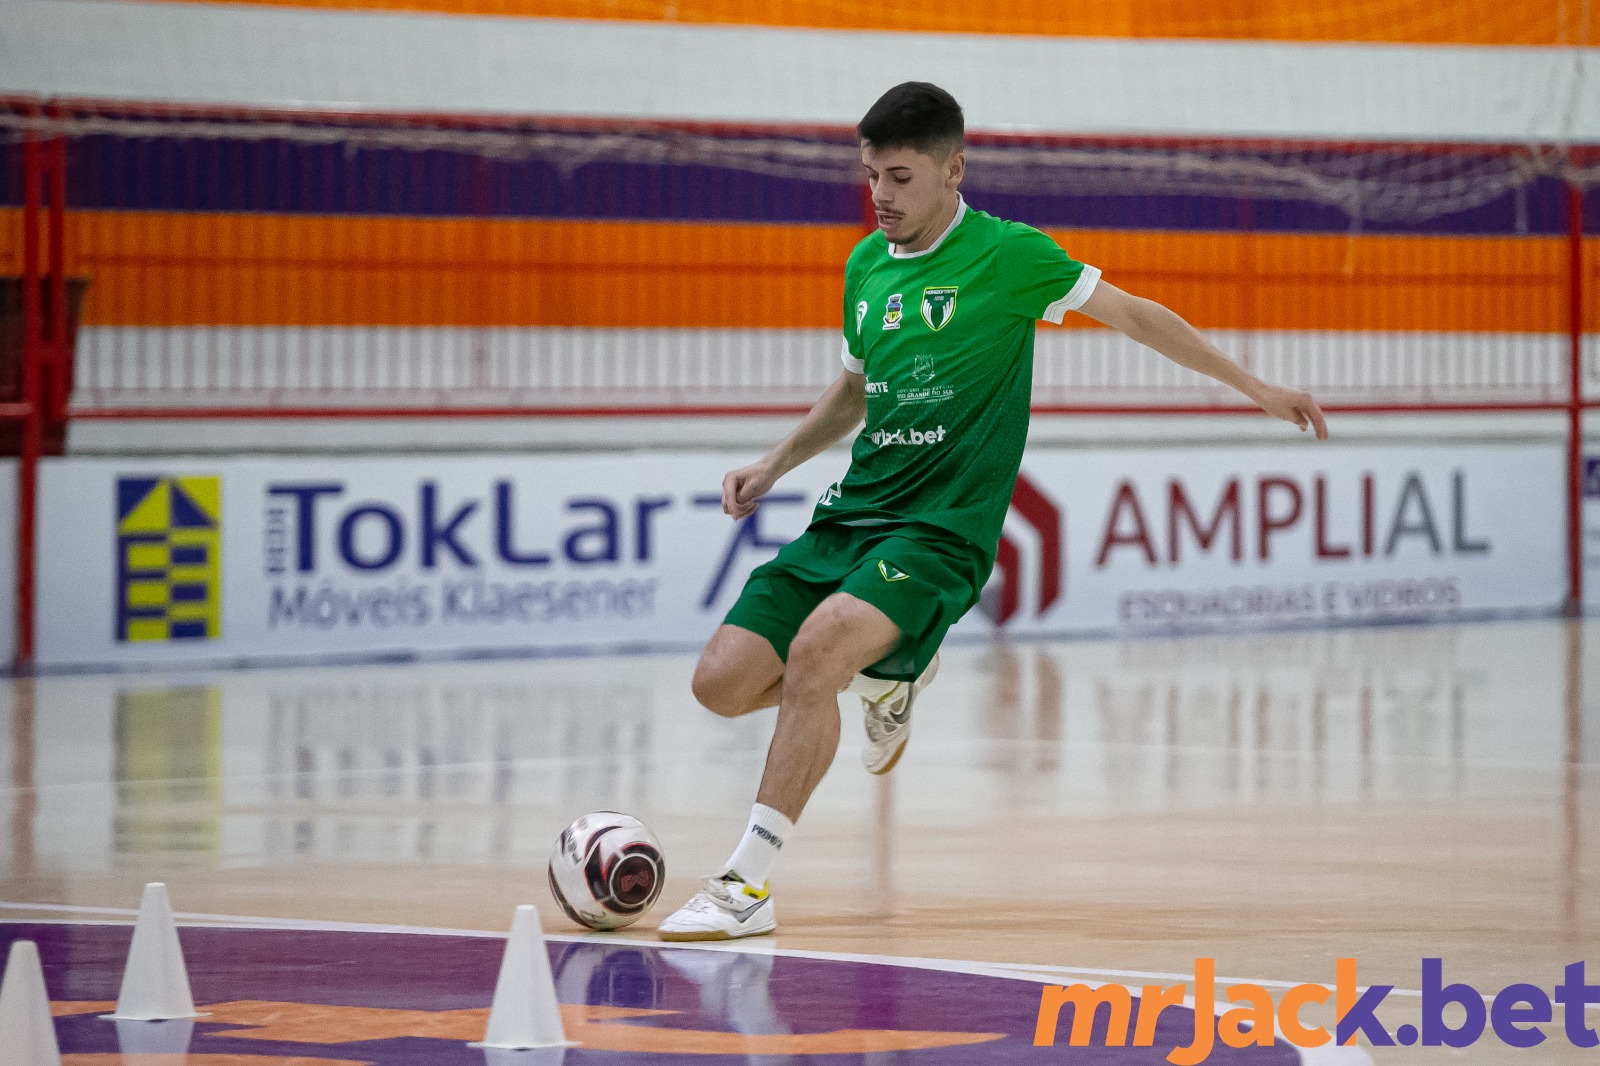 MrJack.bet/Horizontina Futsal enfrenta a AFSJI em partida amistosa